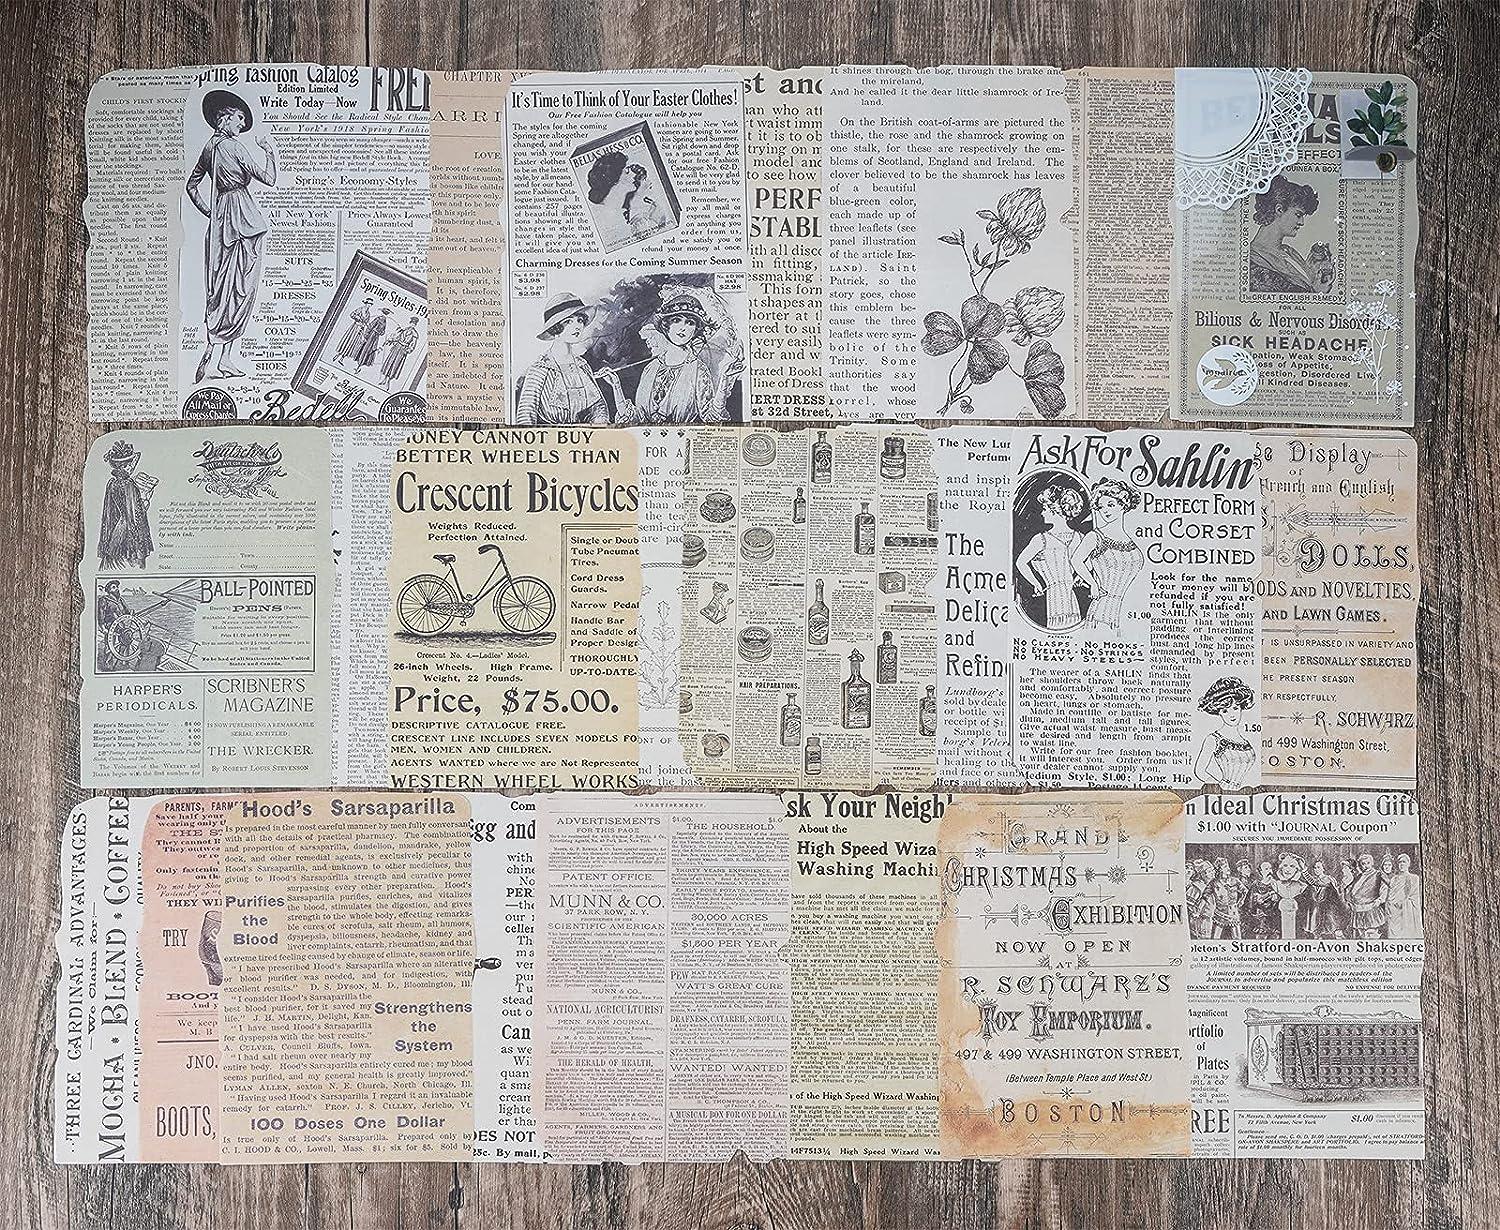 240 Pieces 5 Sets Vintage Scrapbook Paper Junk Journal Pages Scrapbooking  Journaling Supplies Retro Decorative DIY Craft Paper for Scrapbook Planner